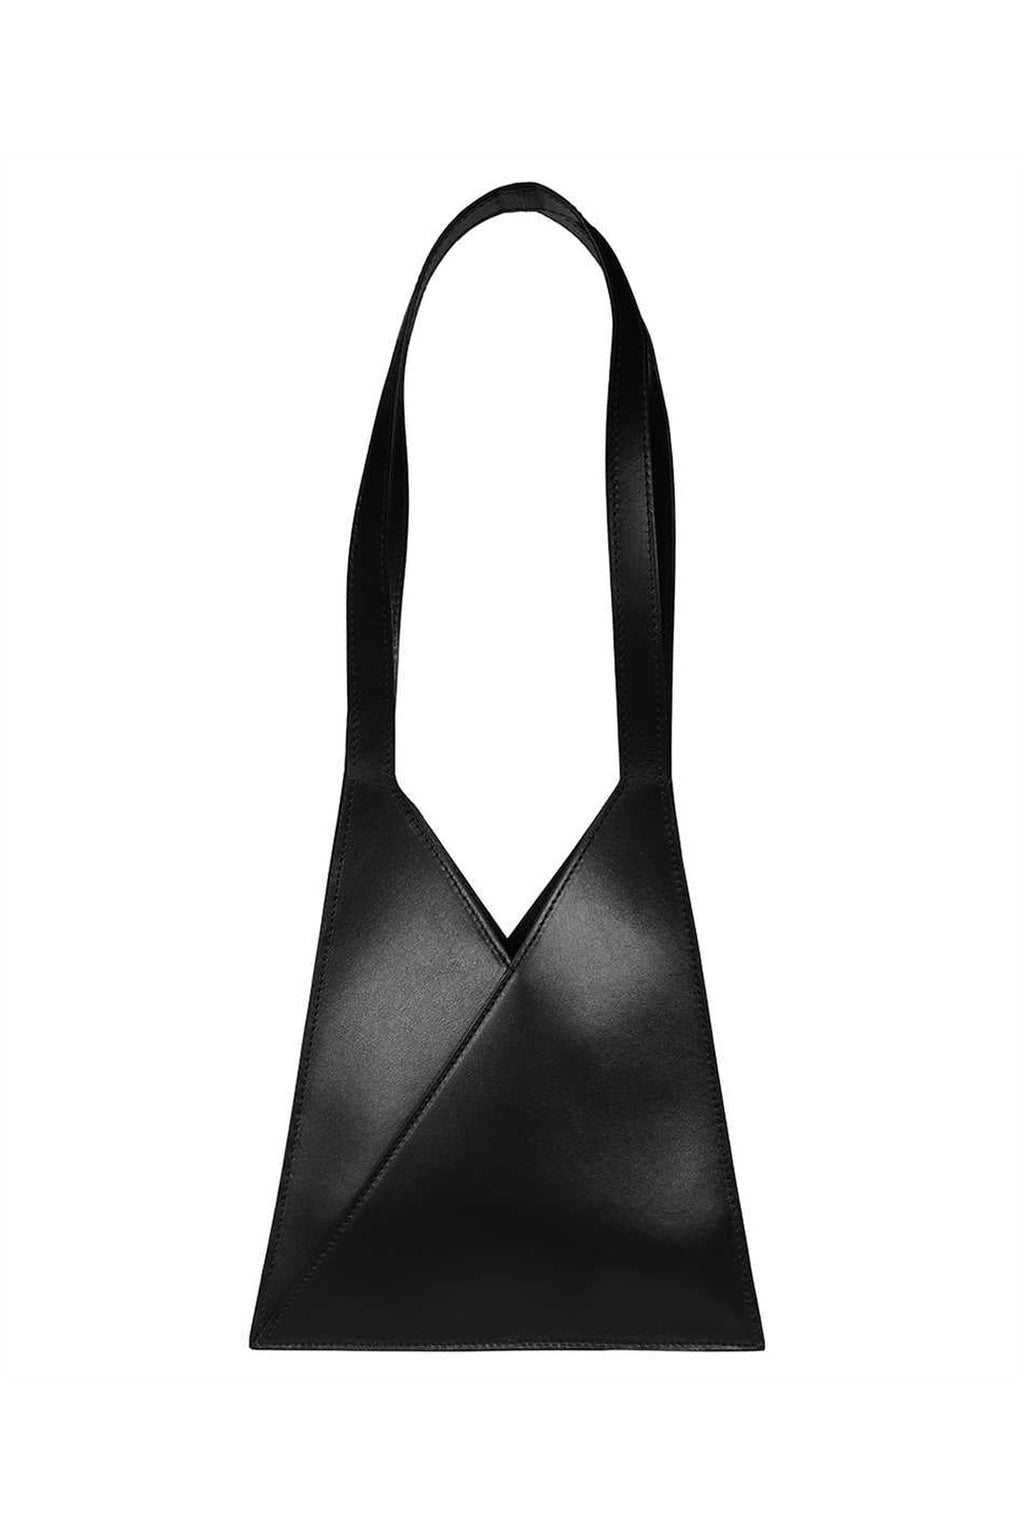 MM6 Maison Margiela-OUTLET-SALE-Japanese leather shoulder bag-ARCHIVIST